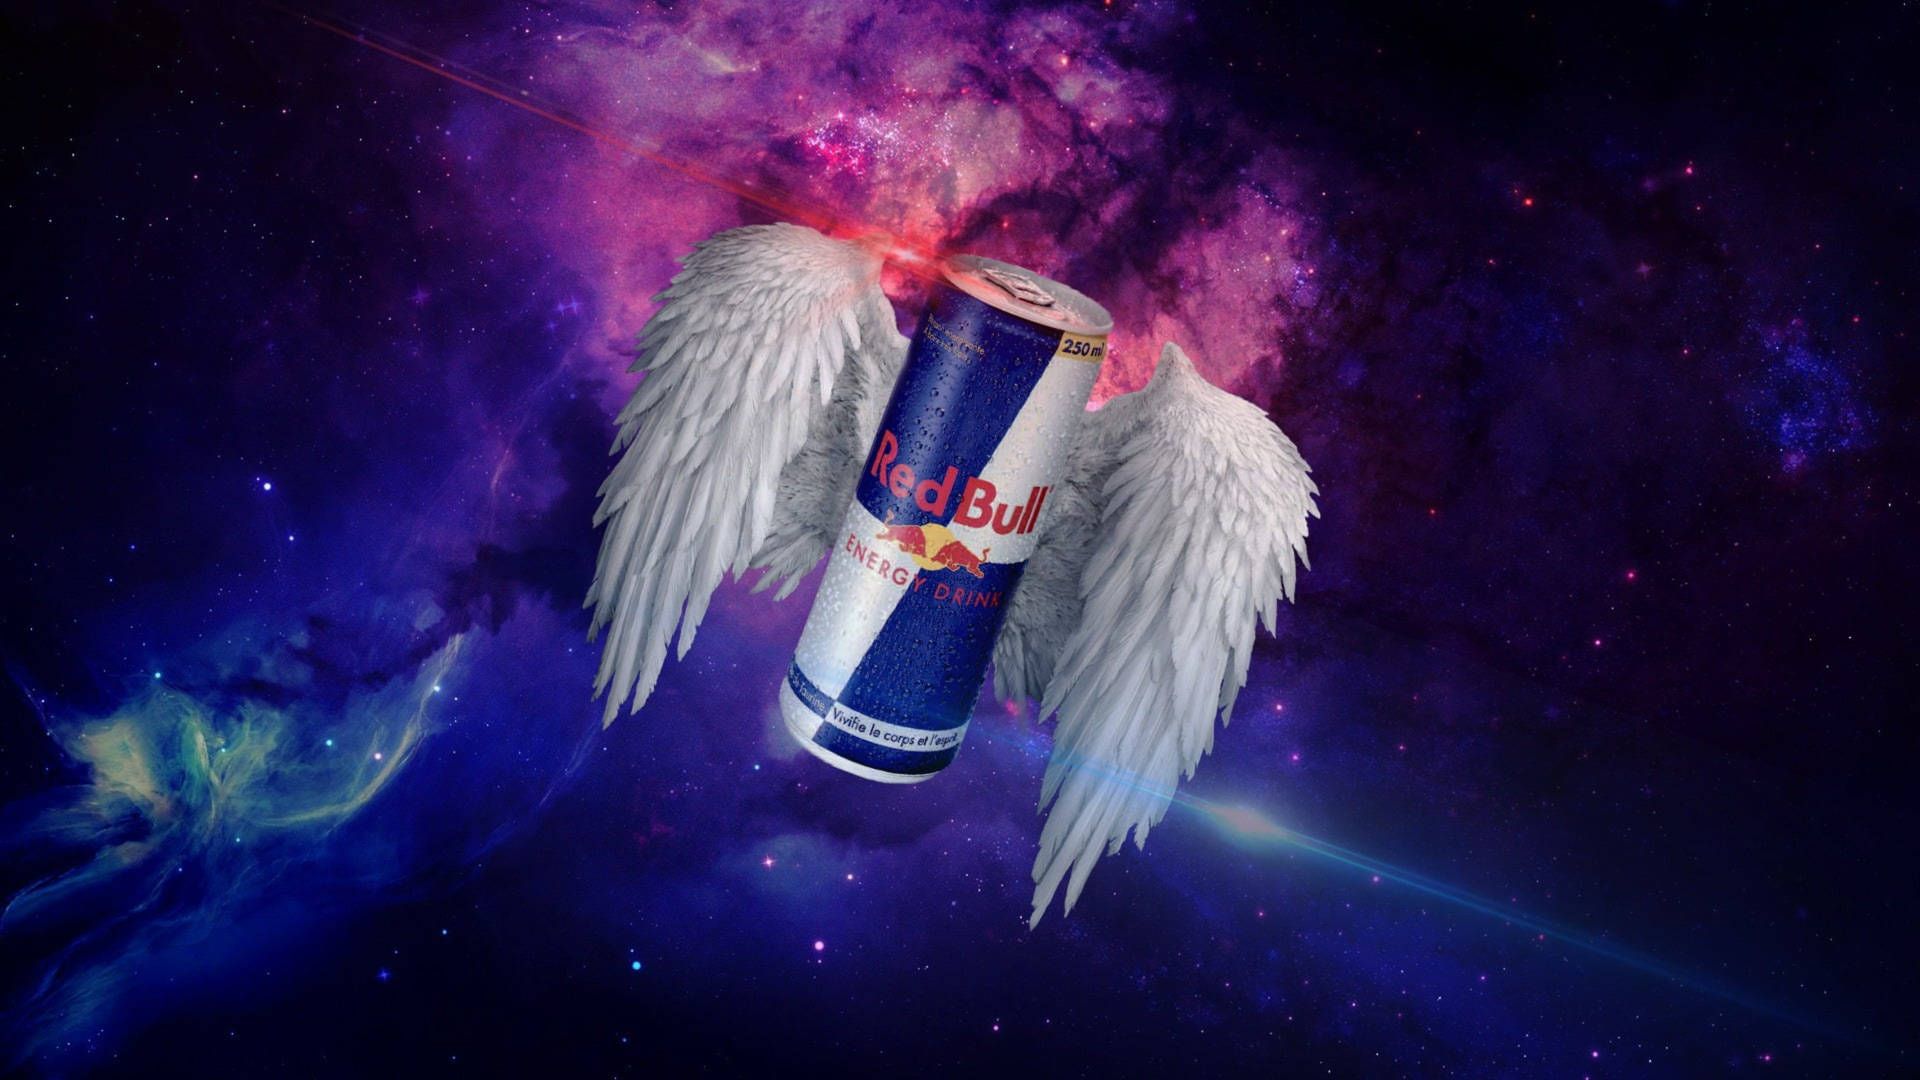  Red Bull Hintergrundbild 1920x1080. Red Bull Wallpaper